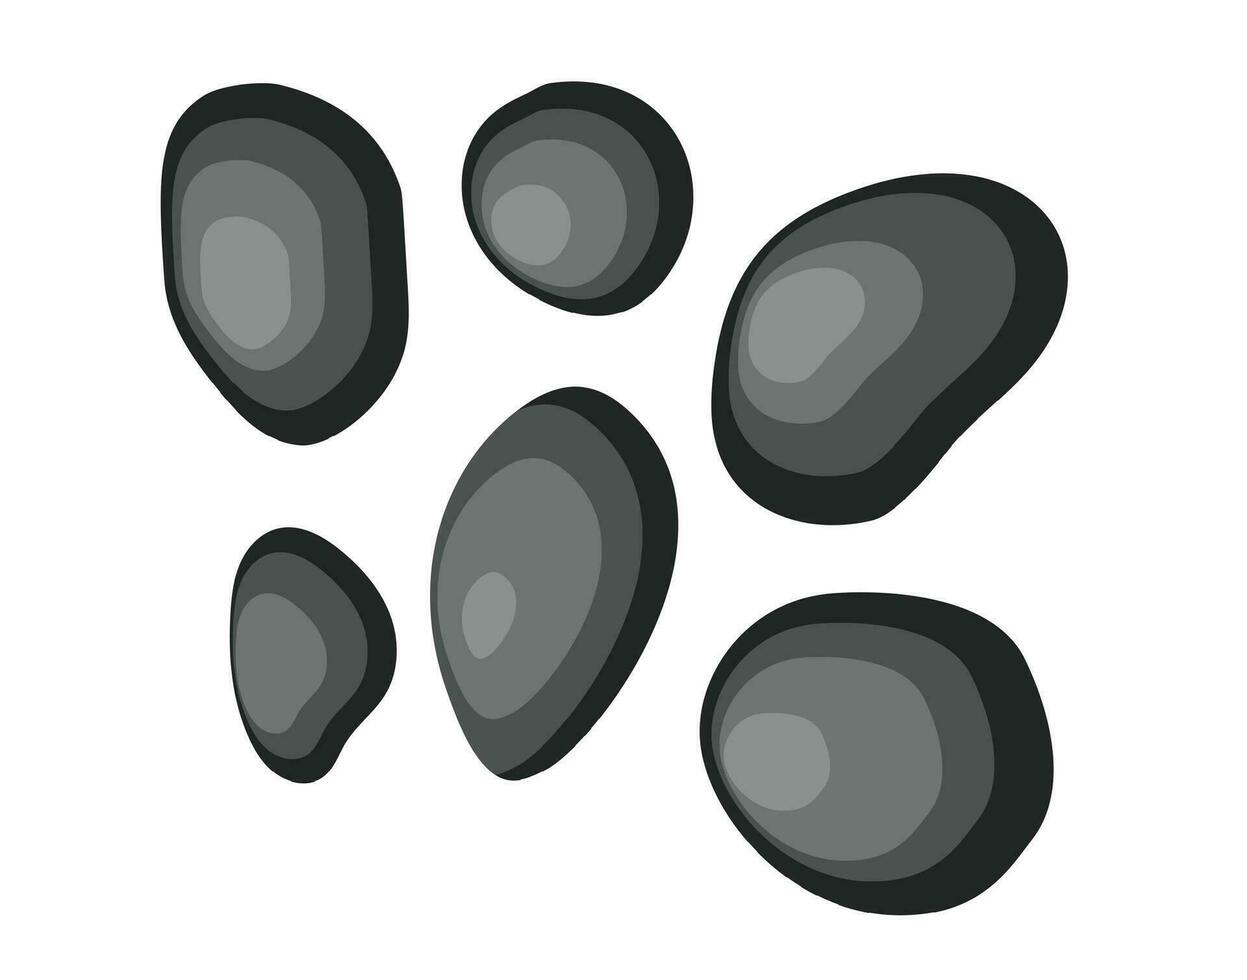 Set black basalt stones for massage, spa salon accessory. Vector illustration in flat style